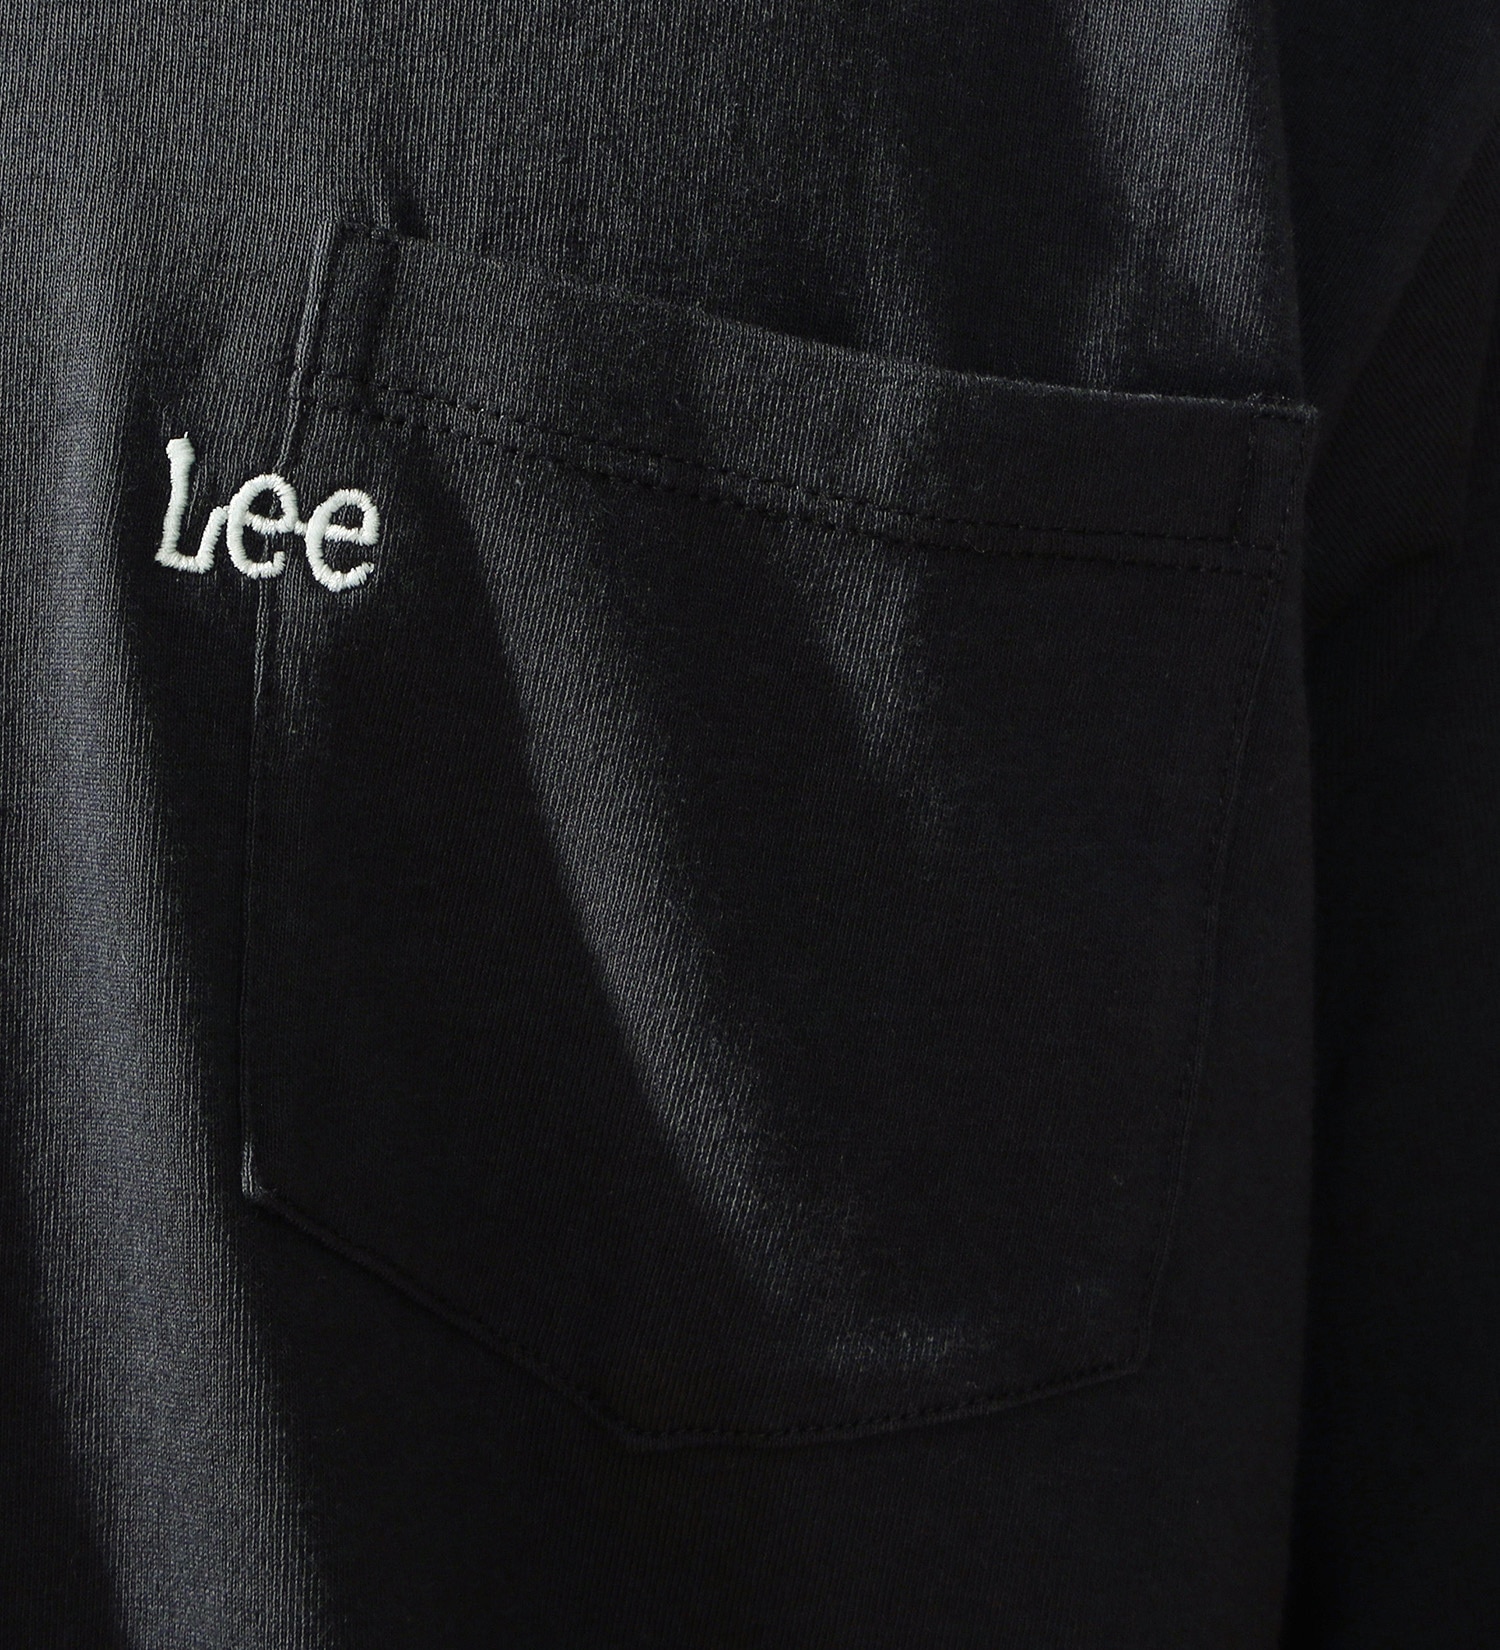 Lee(リー)の【SALE】Lee刺繍 ポケット ロングスリーブTee|トップス/Tシャツ/カットソー/メンズ|チャコールグレー